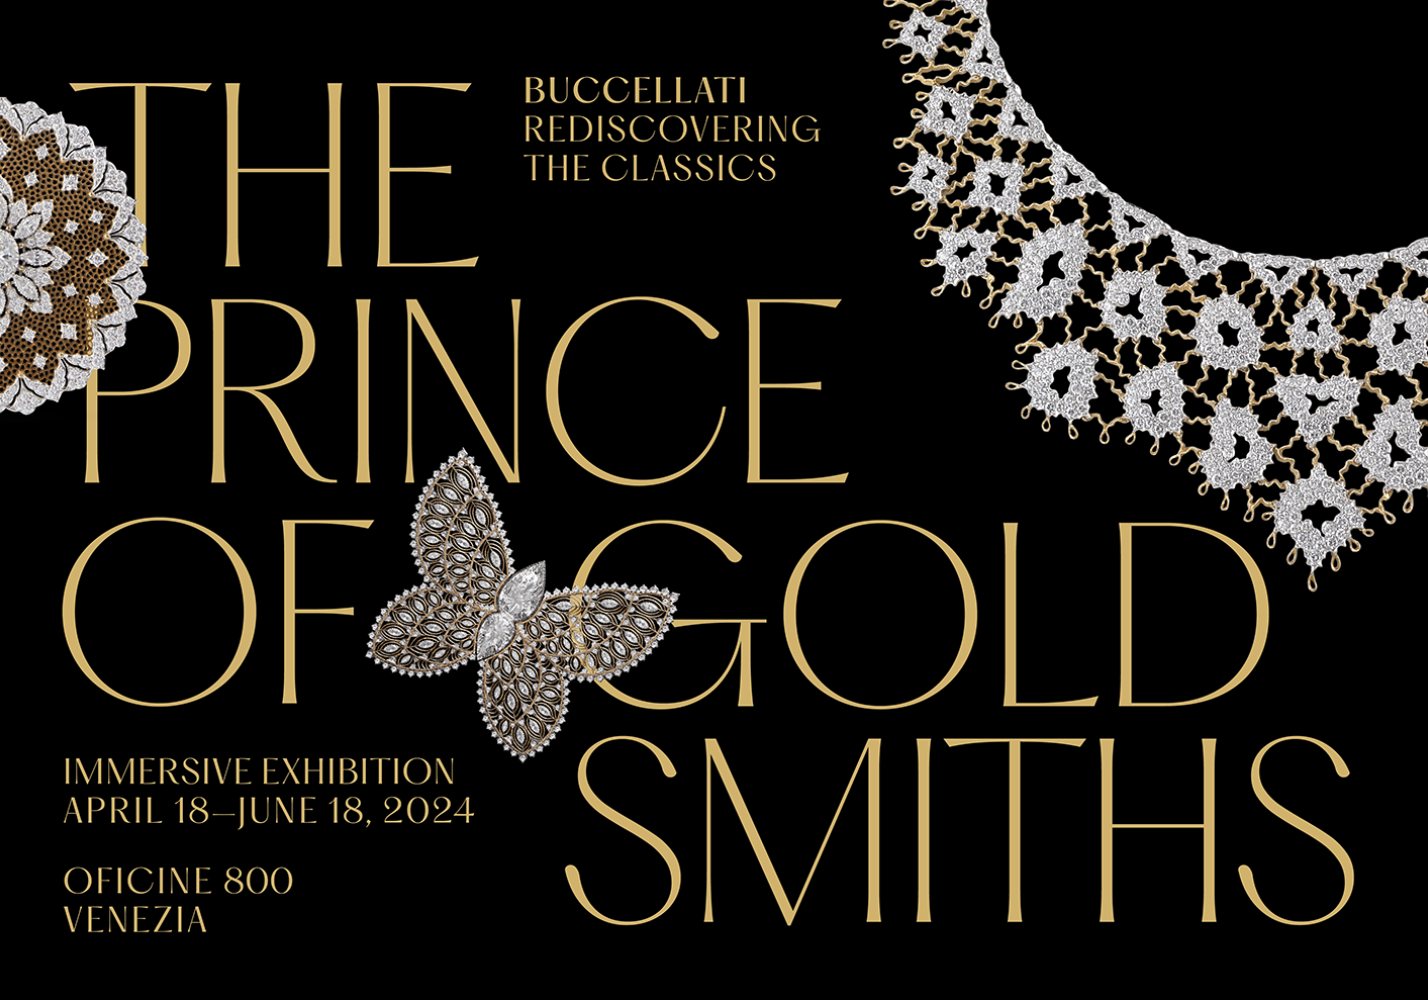 BUCCELLATI, VENEDİK'te "The Prince of Goldsmiths, Rediscovering the Classics" SERGİSİNE EV SAHİPLİĞİ YAPACAK | Times de Luxe